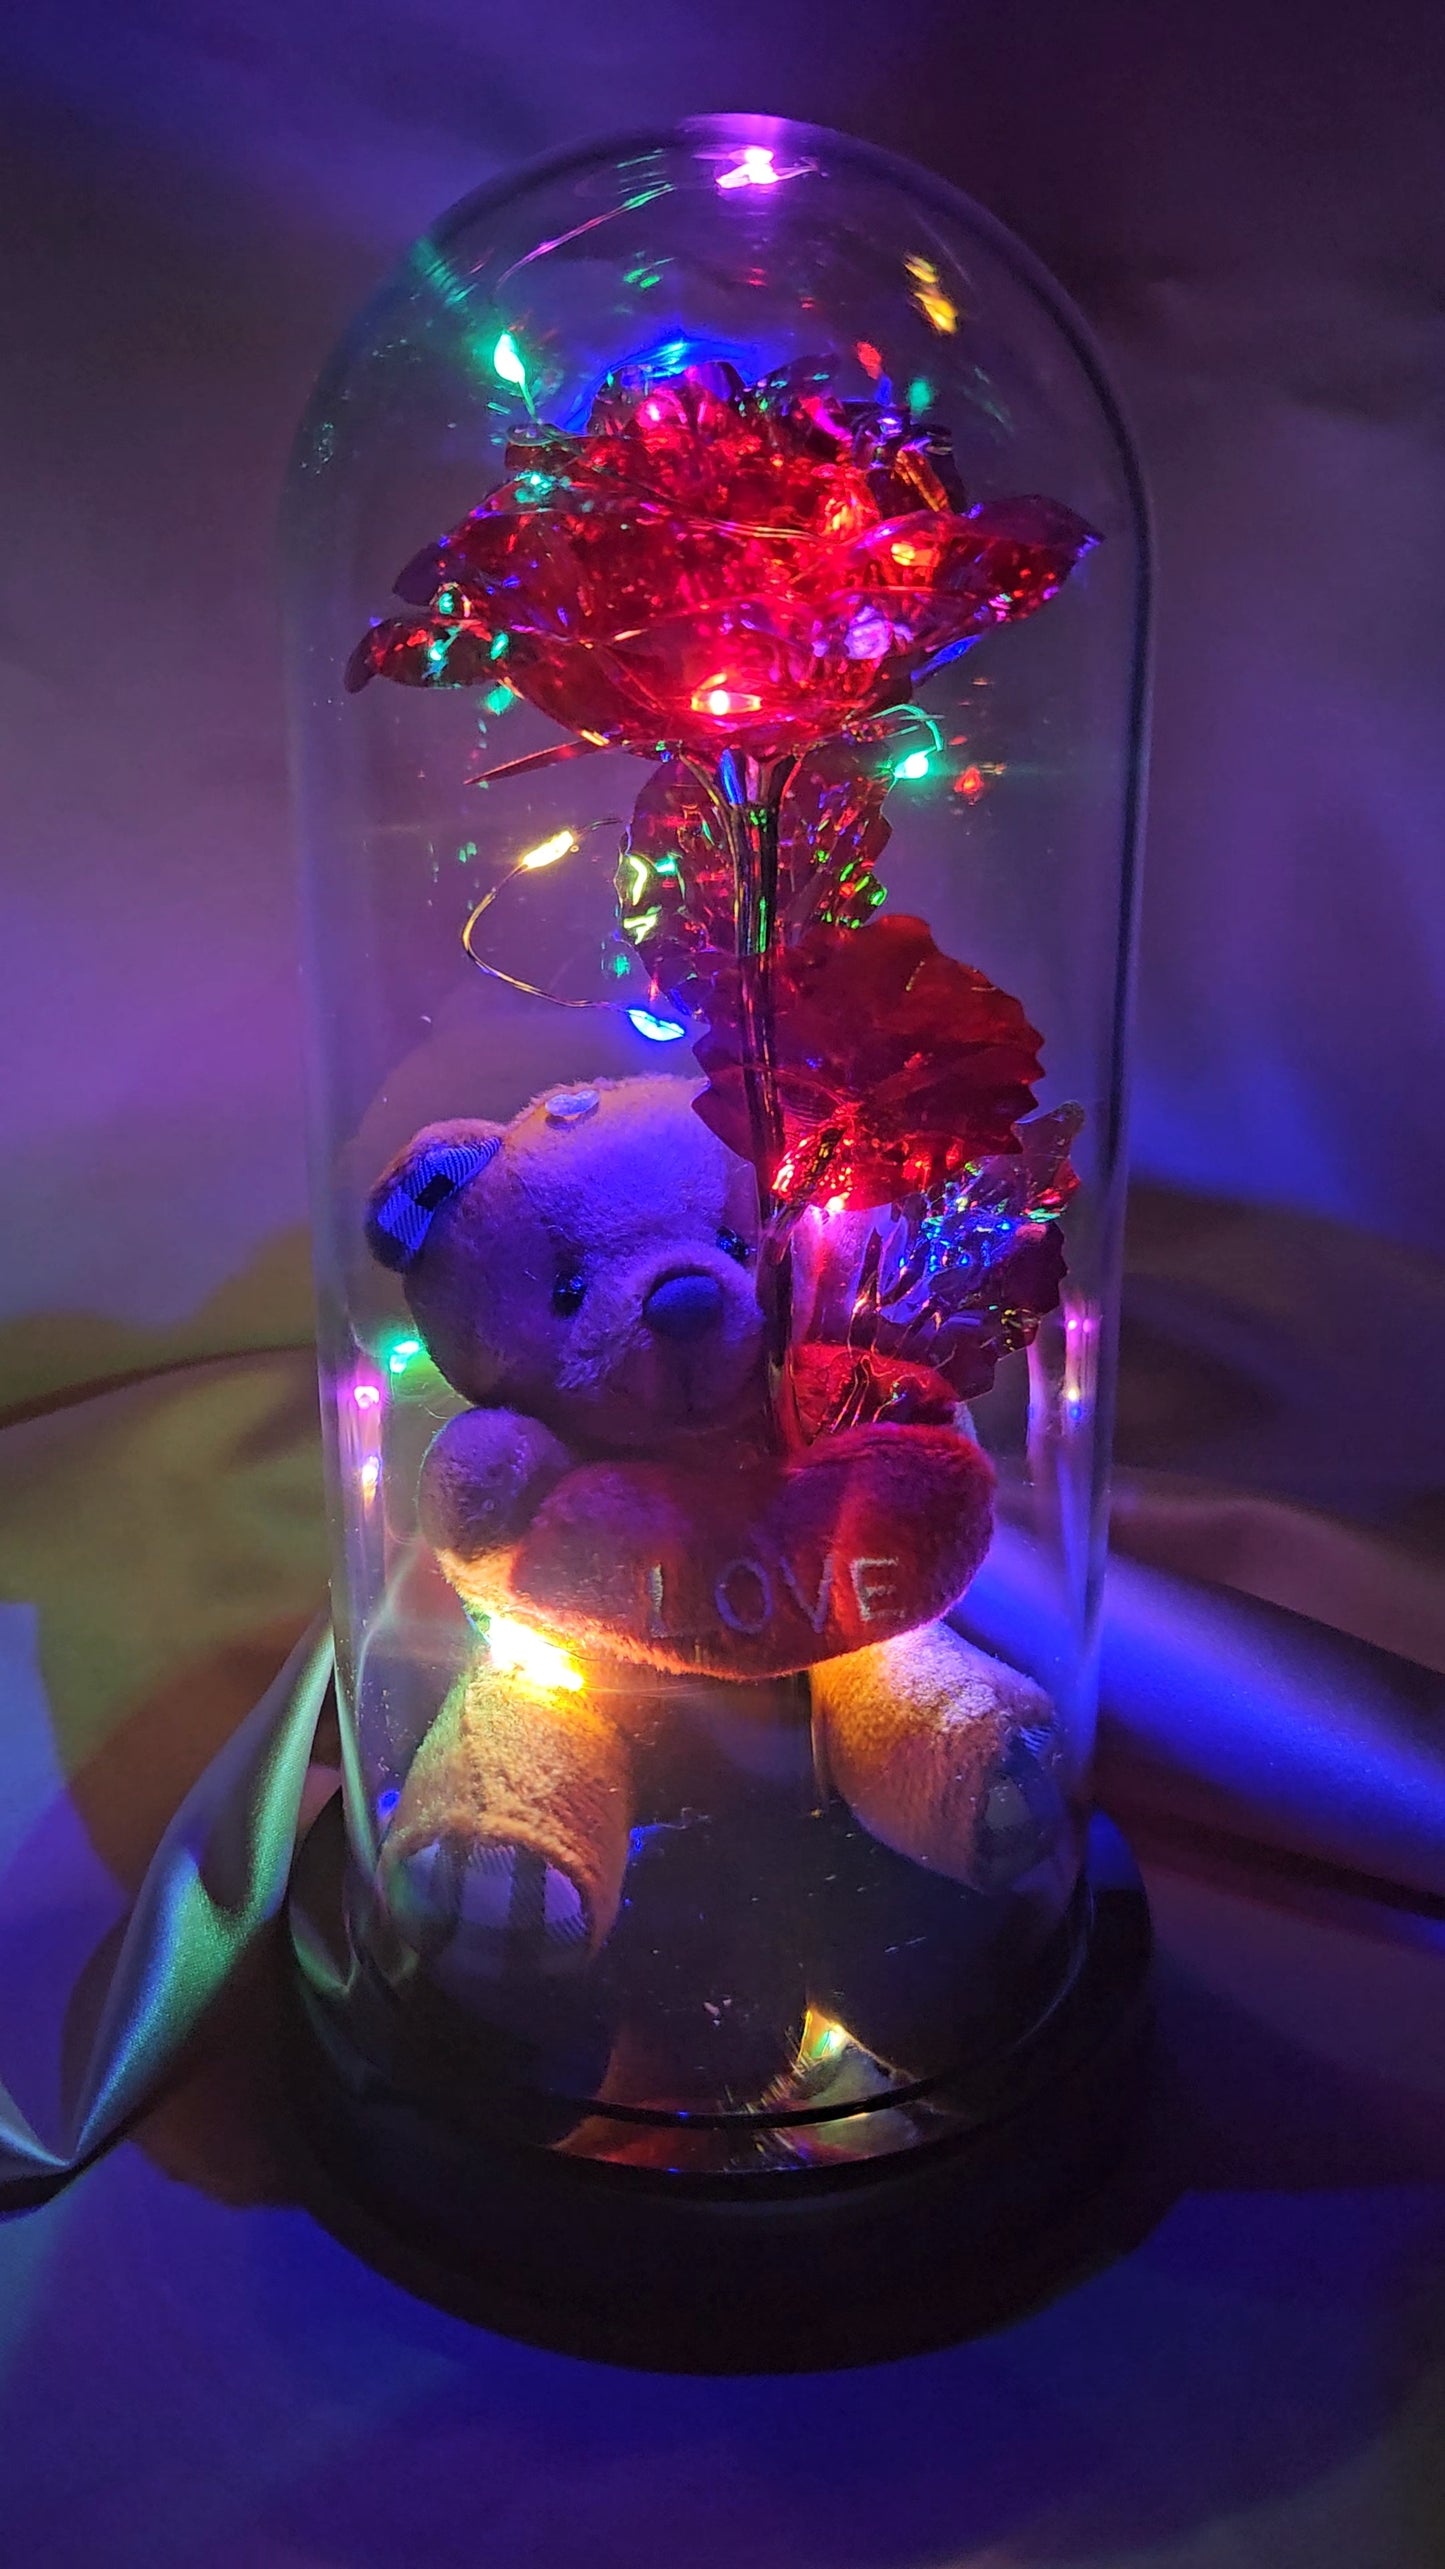 Light Up Rose with Teddy Bear